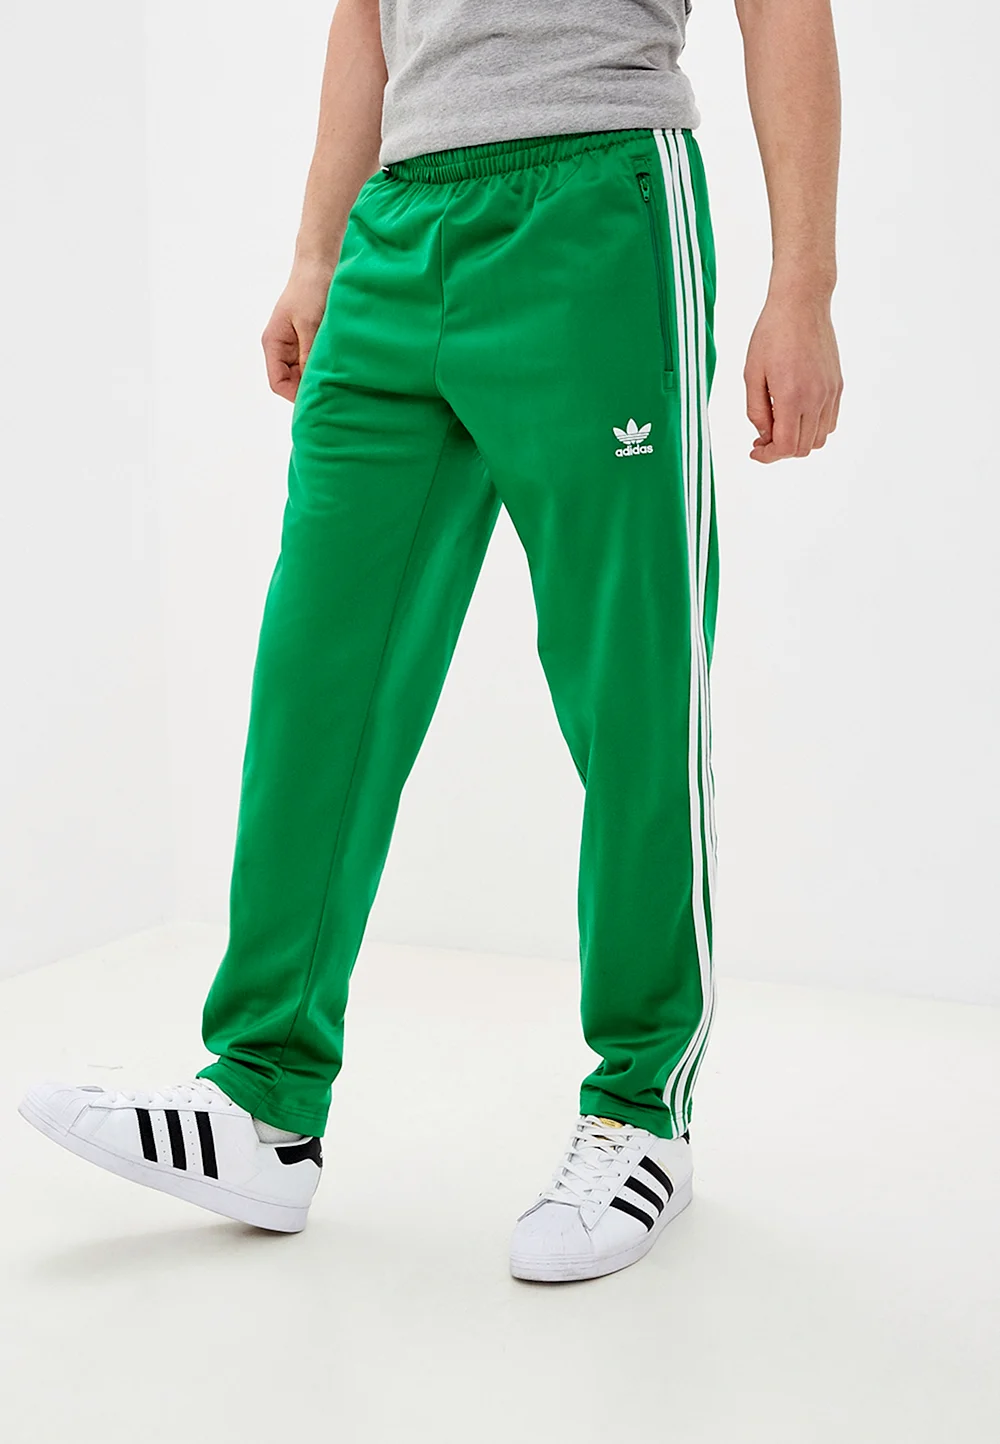 Adidas Originals штаны зеленые